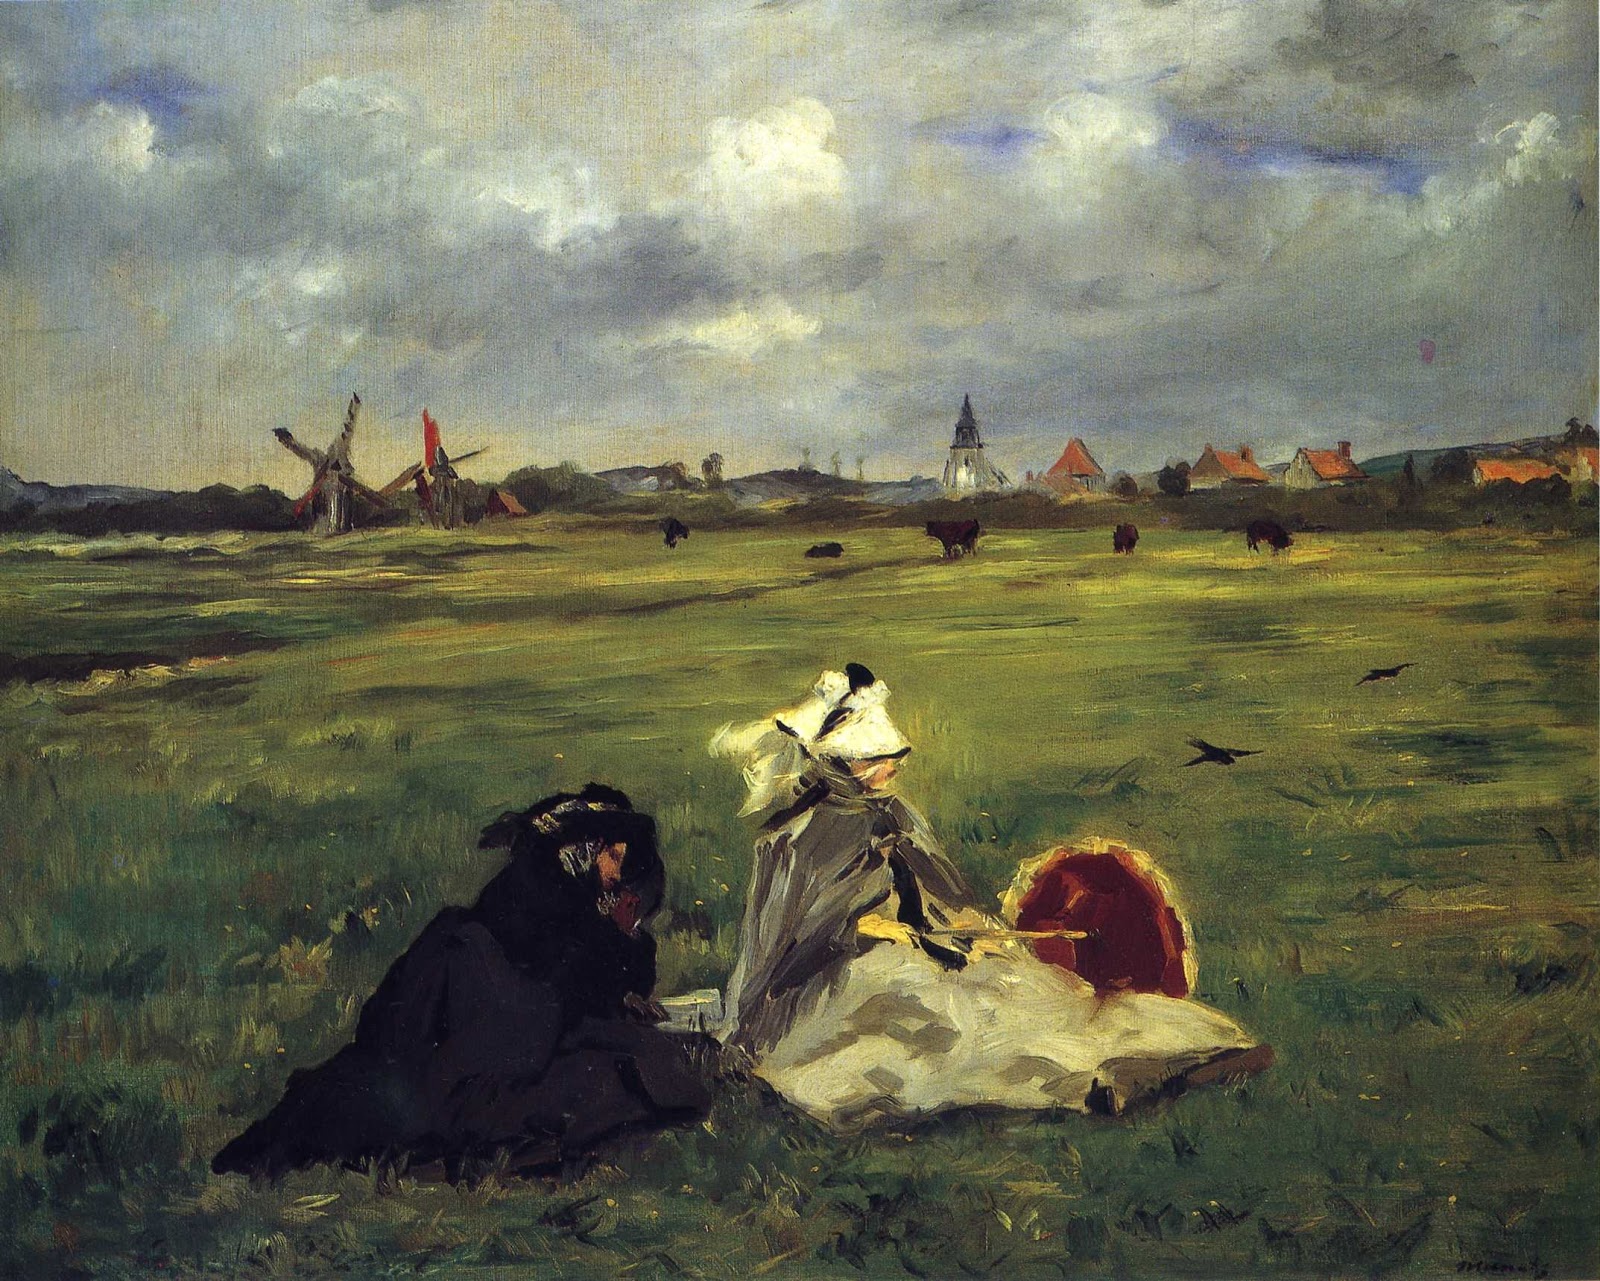 Edouard+Manet-1832-1883 (180).jpg